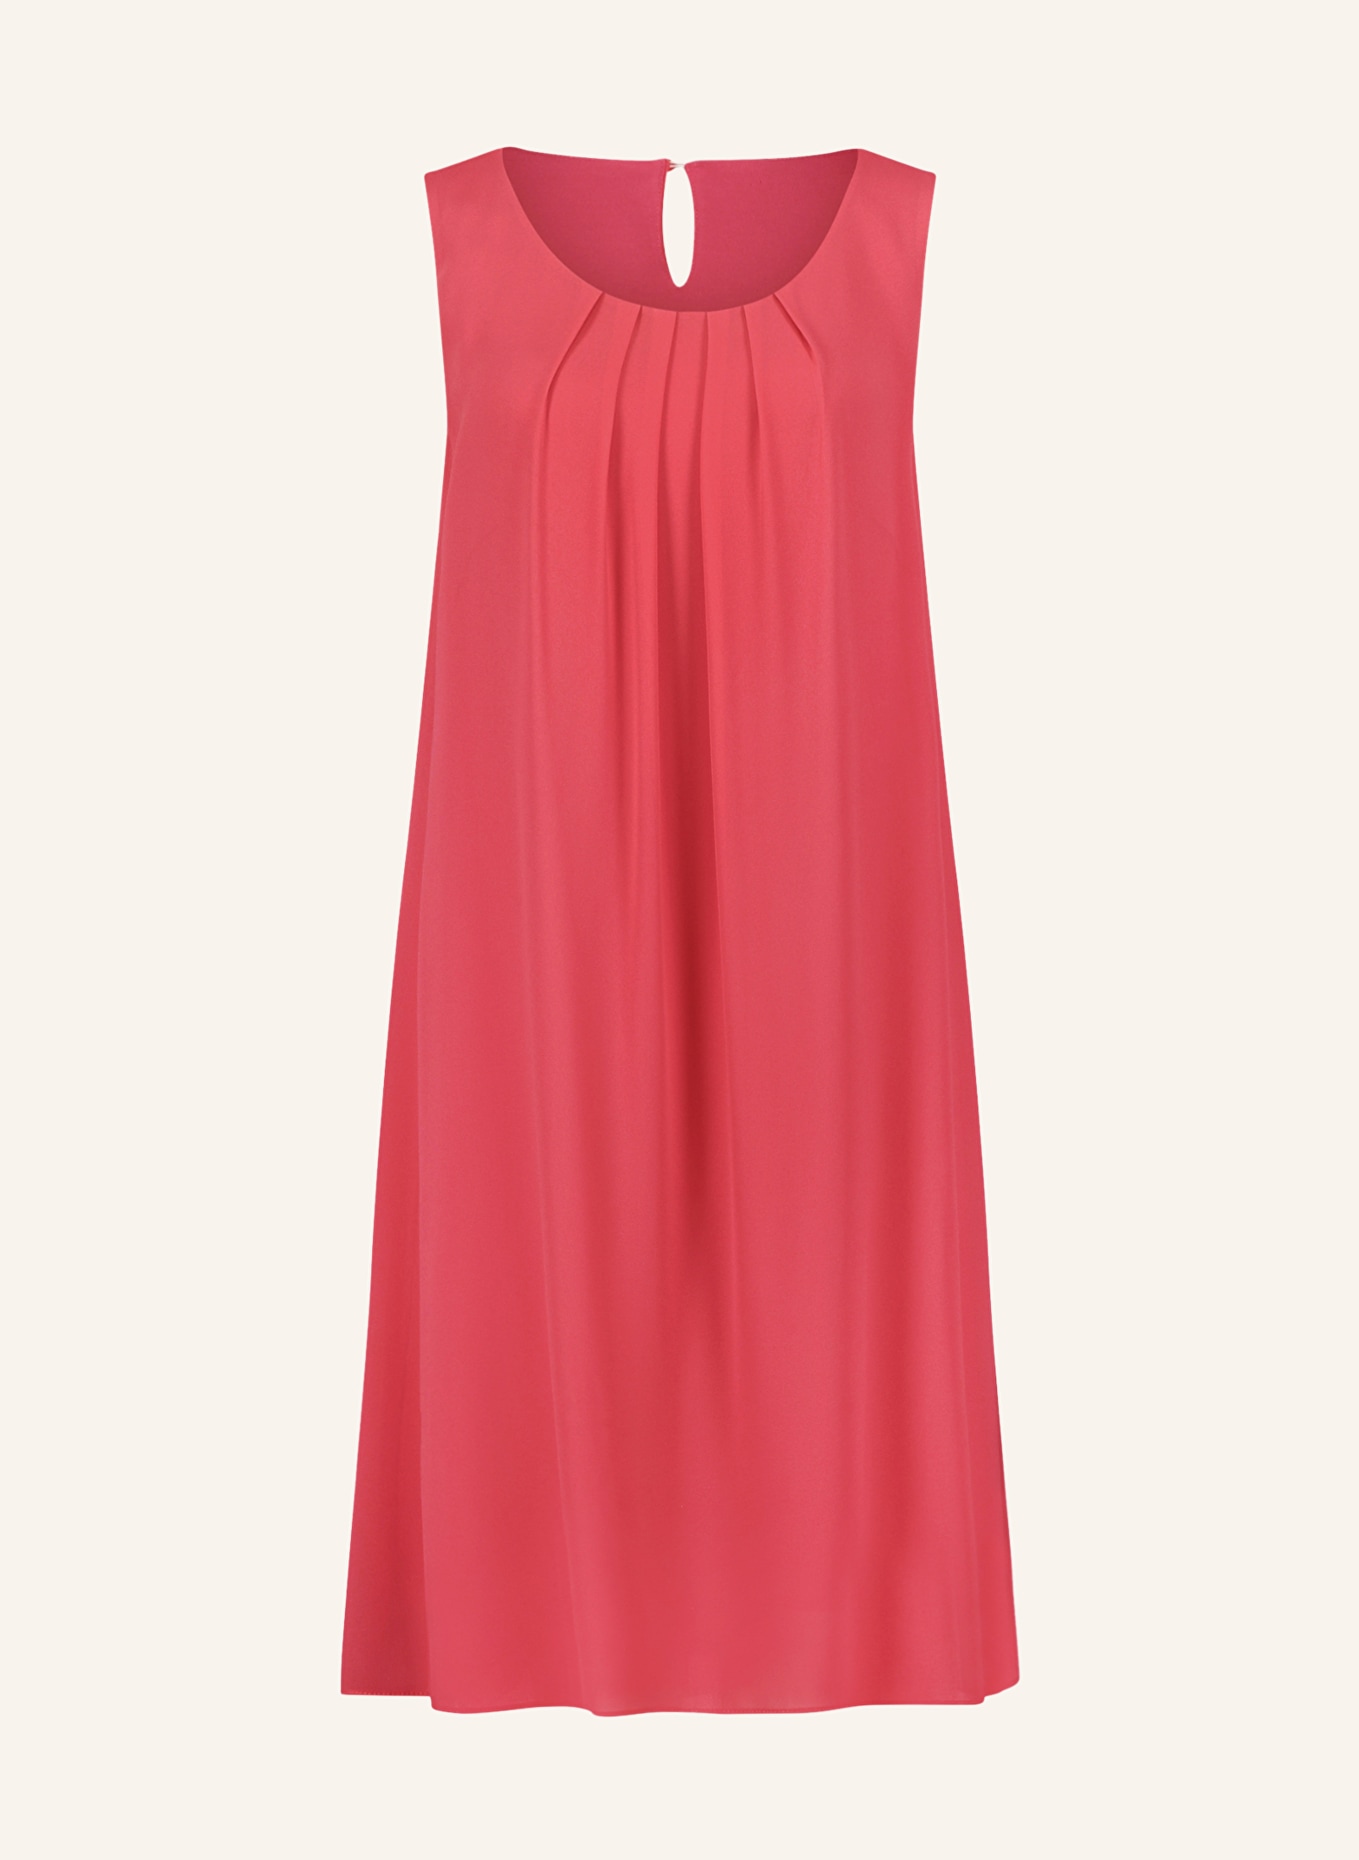 CARTOON Kleid, Farbe: HELLROT (Bild 1)